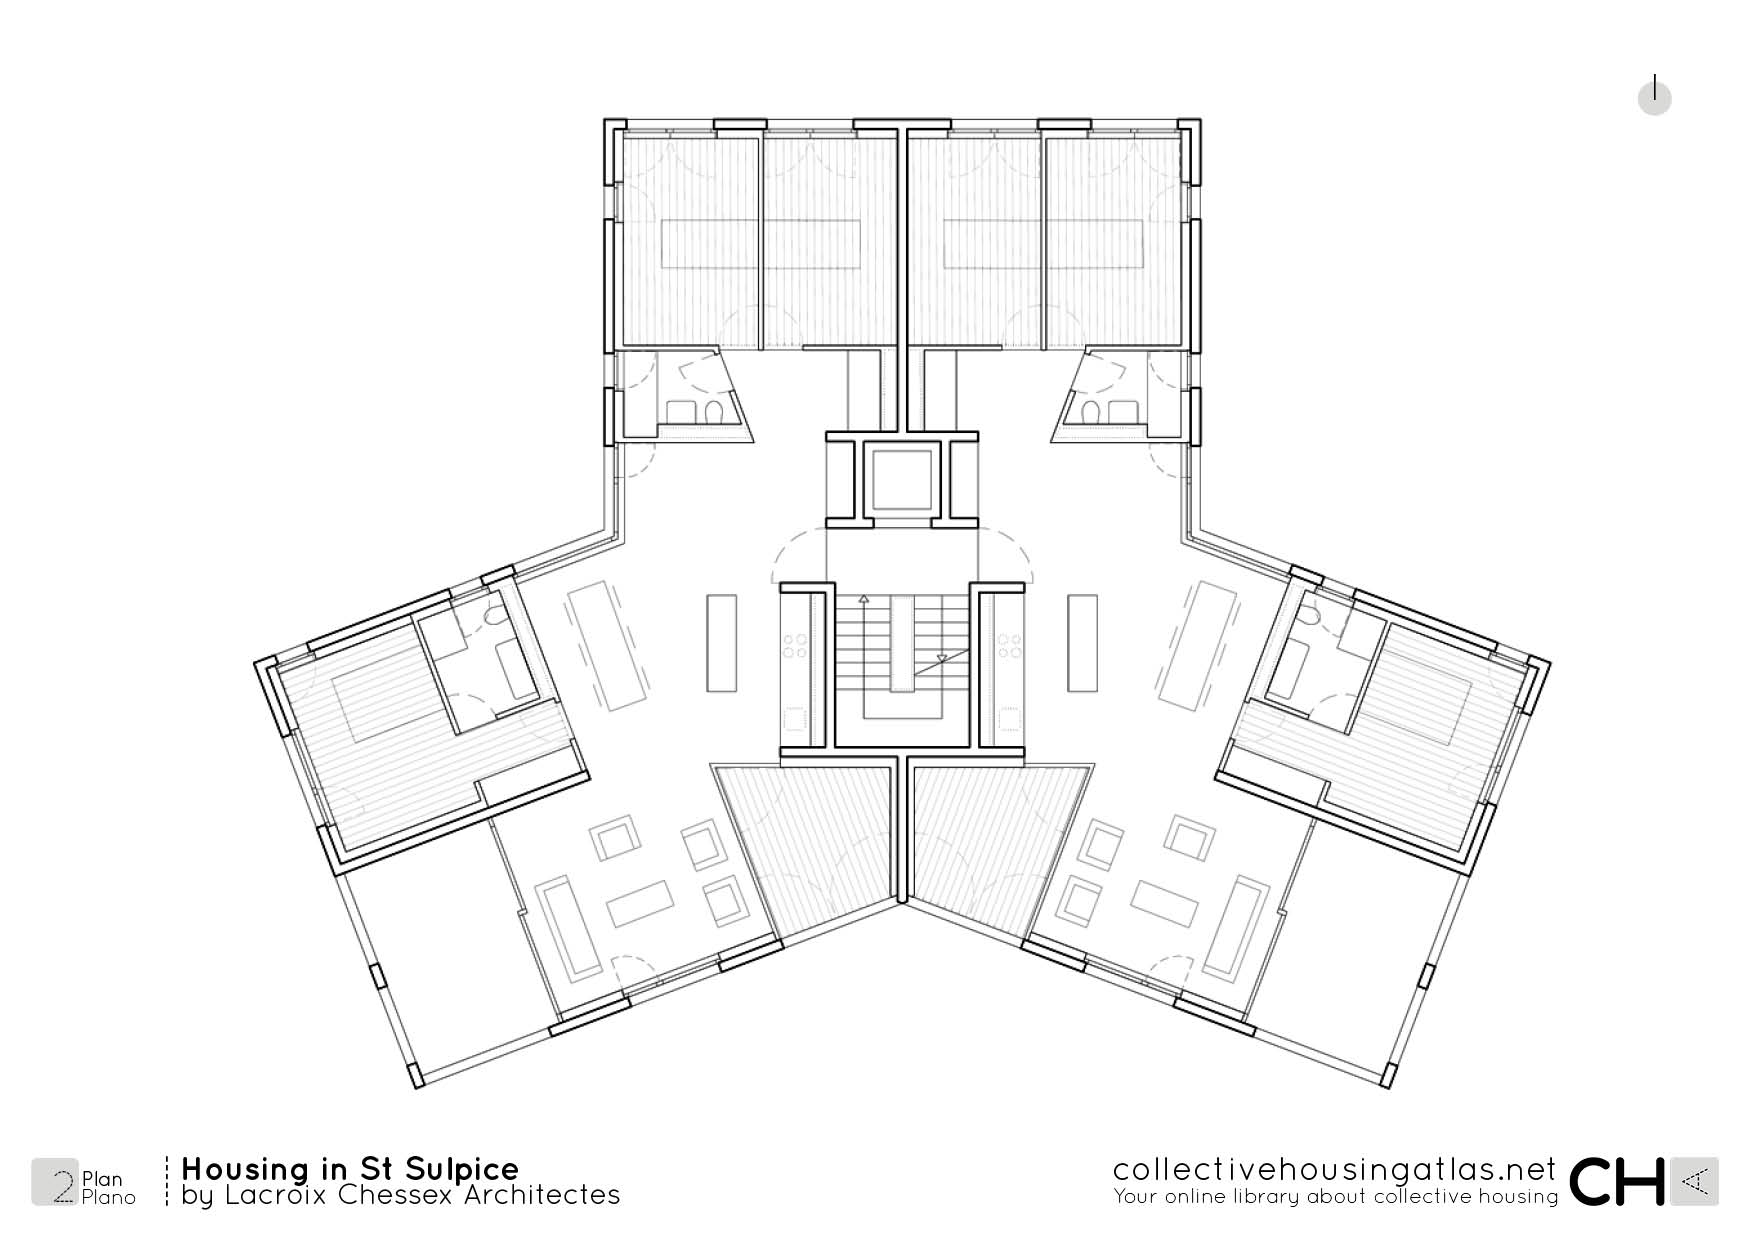 Tower block 2 – Collective Housing Atlas